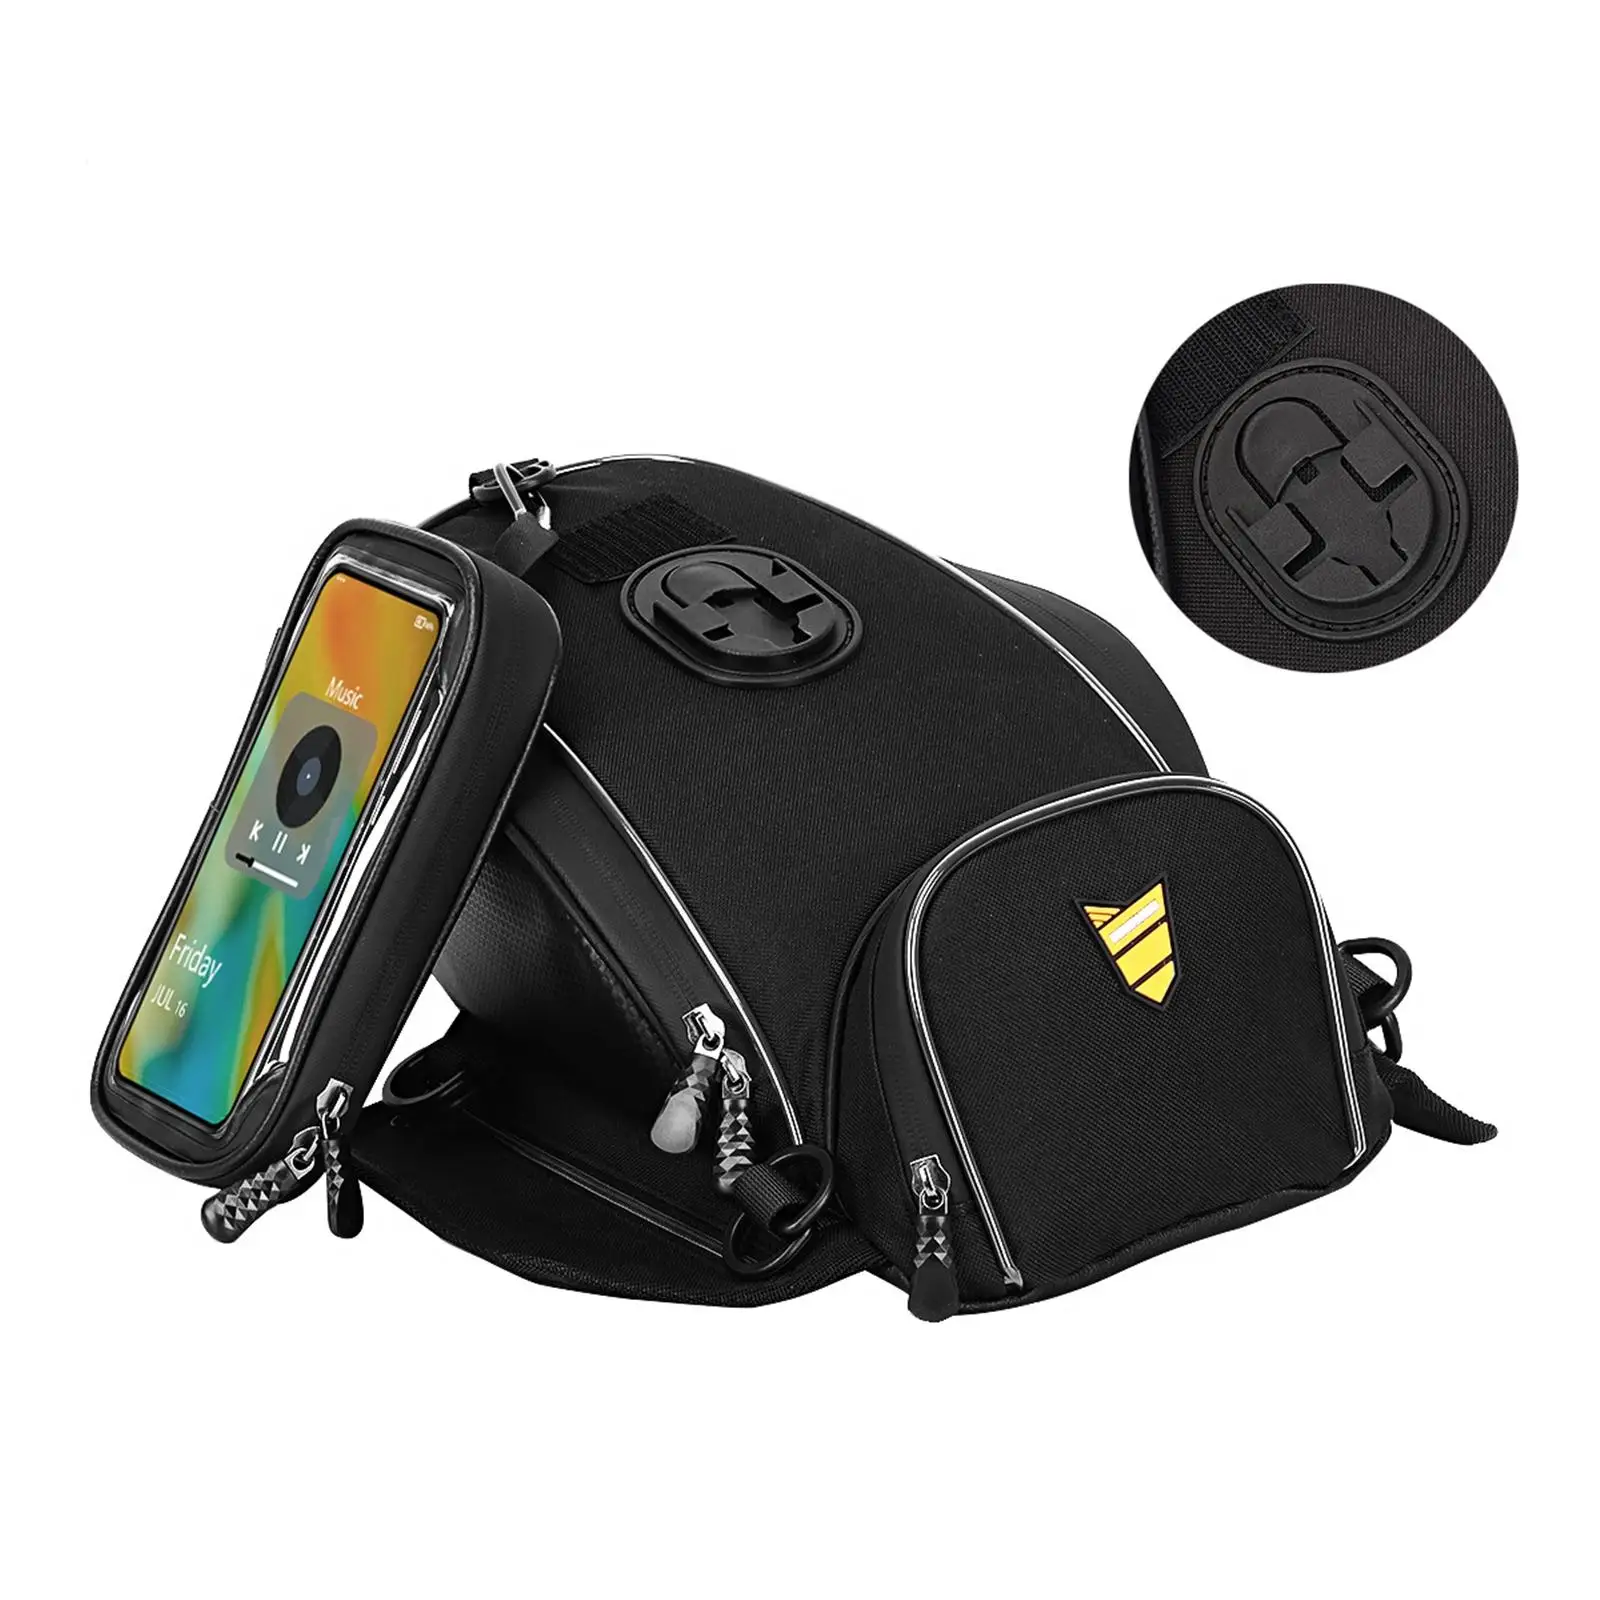 Motorbike Gas Oil Tank Bag Waterproof Portable Convenient for Short Trip Easily